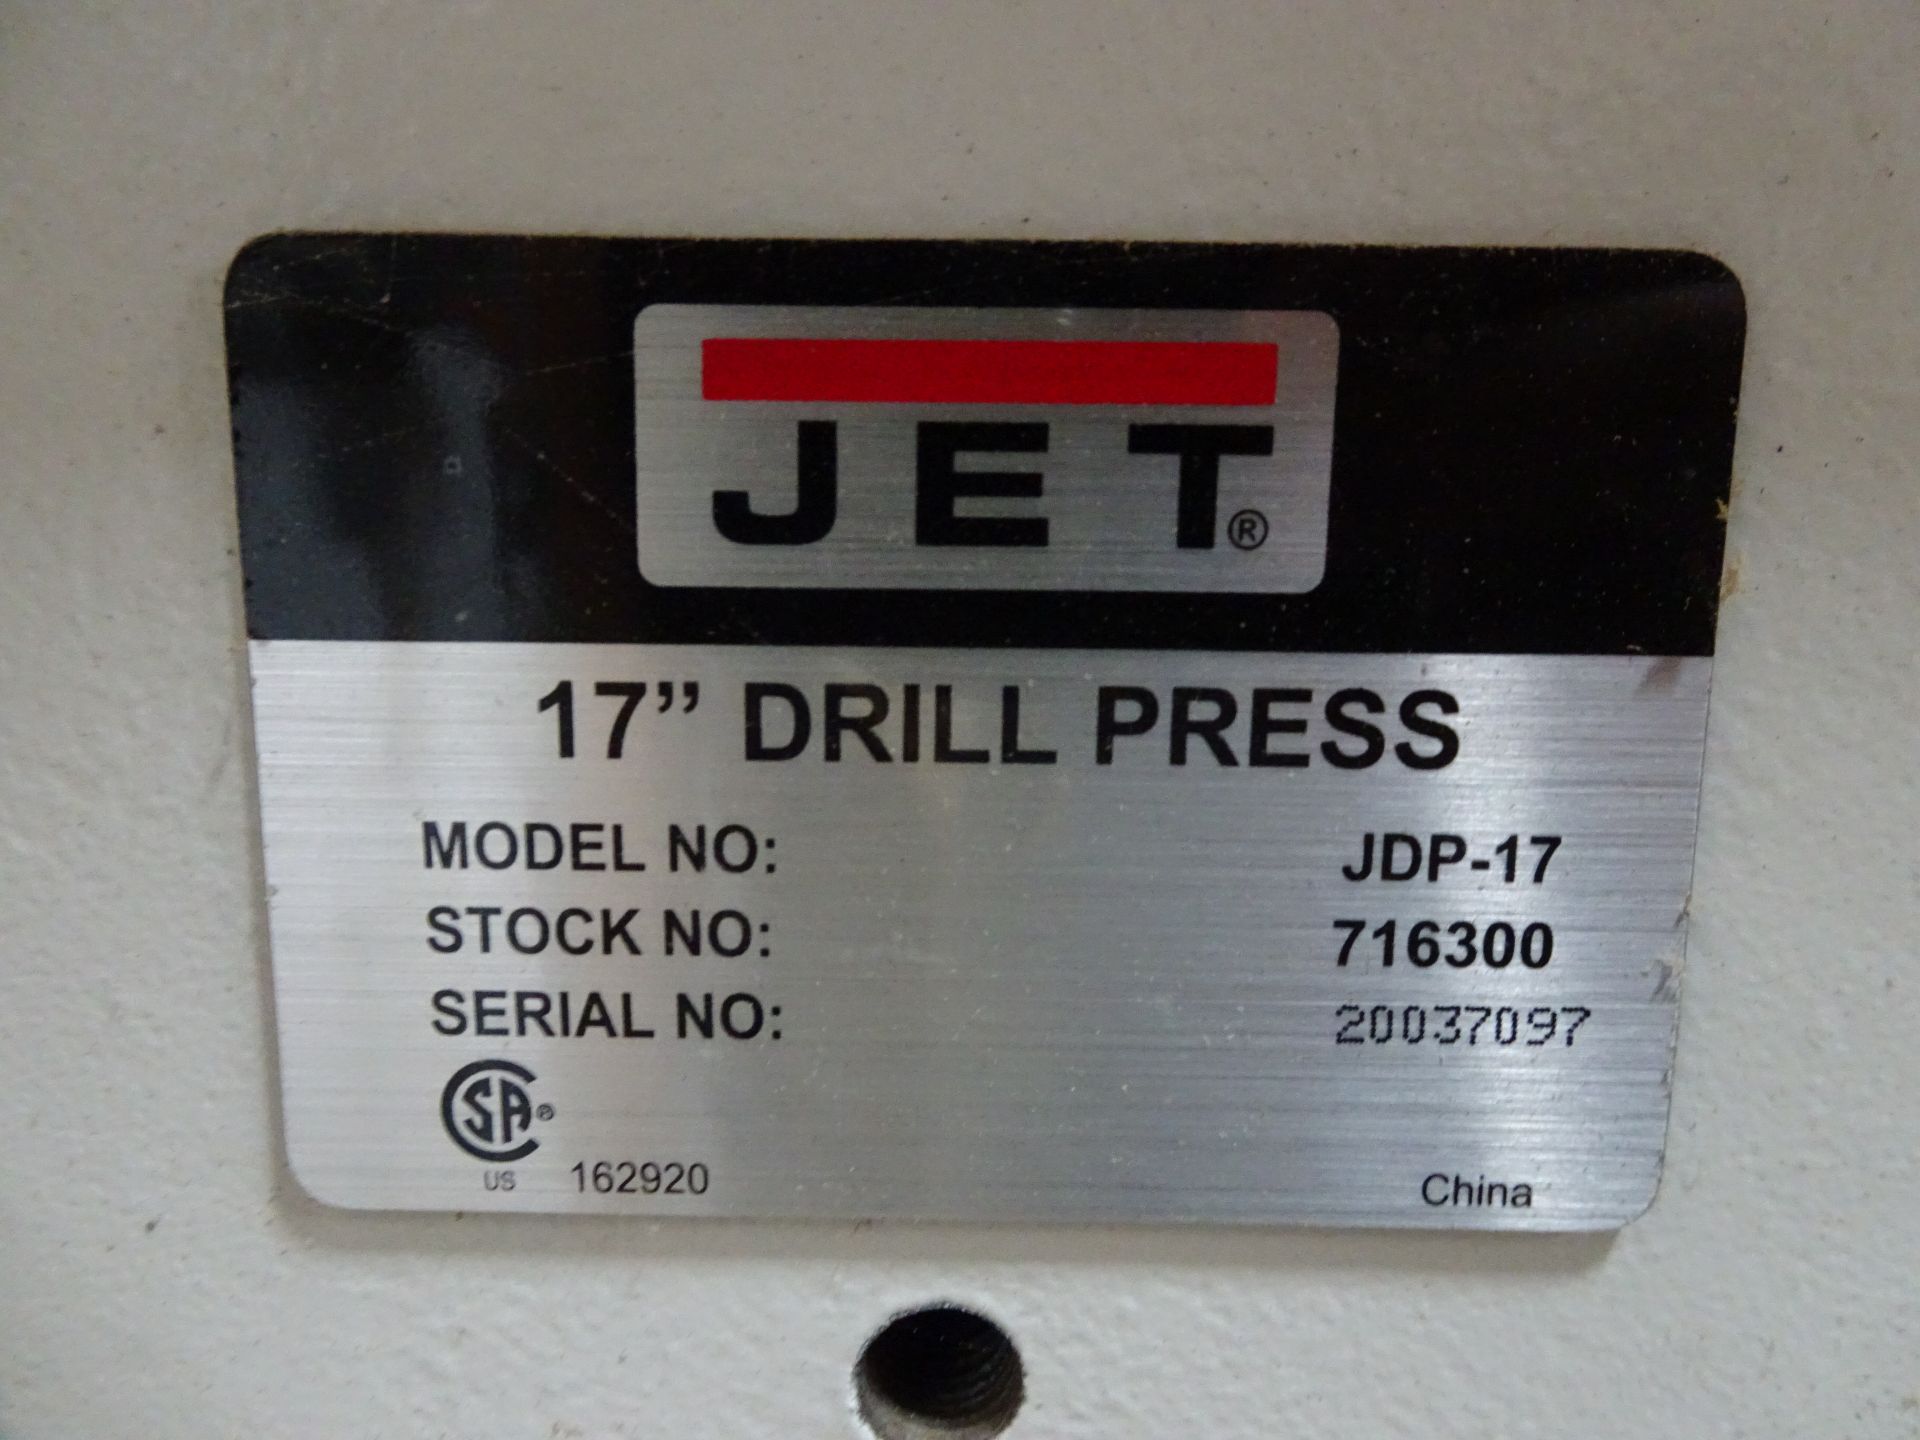 Jet Model JDP-17 17" Drill Press, S/N 20037097 - Image 3 of 3